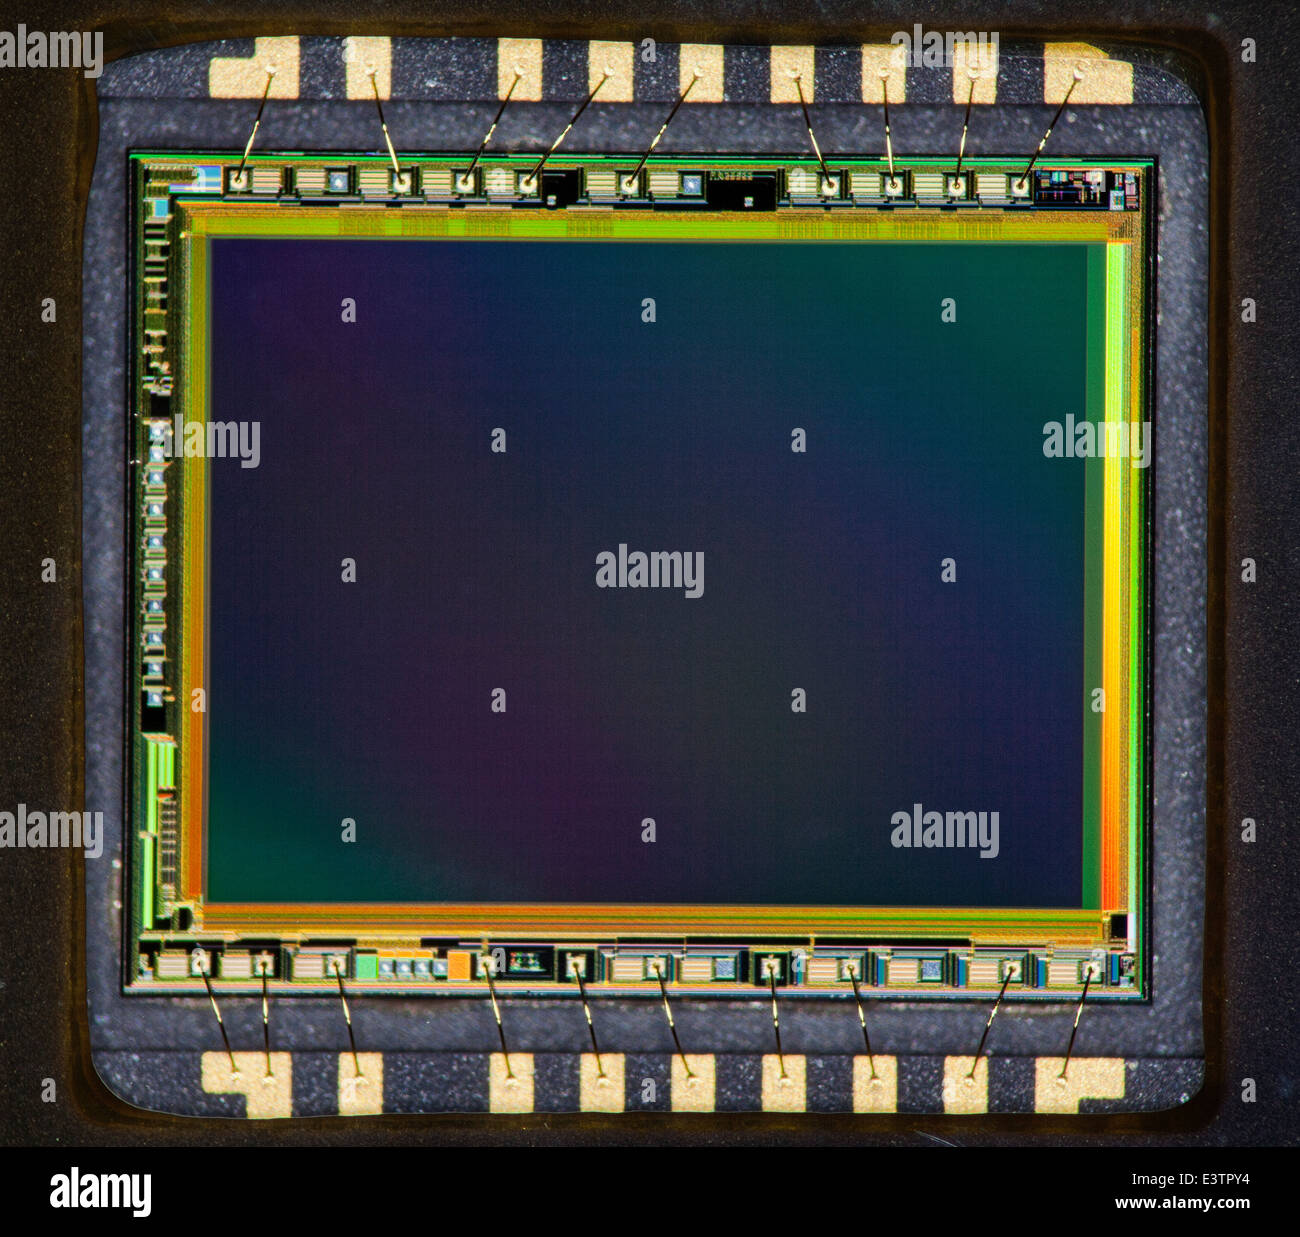 Consumer market camera CMOS sensor, showing gold contacts Stock Photo